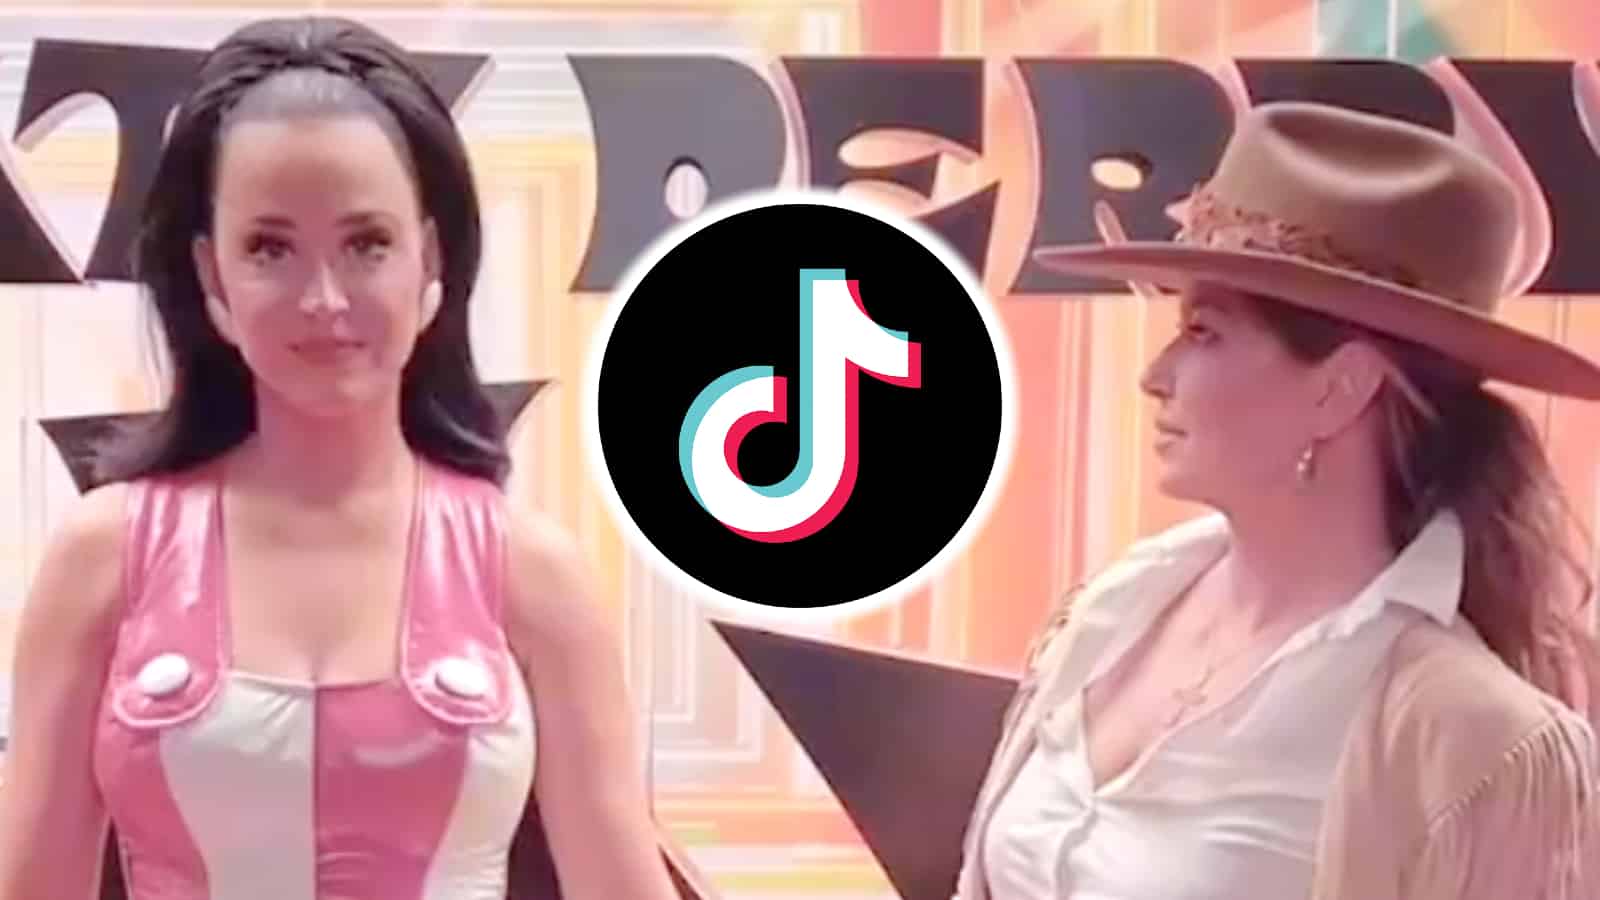 Katy Perry next to Shania Twain with the TikTok logo